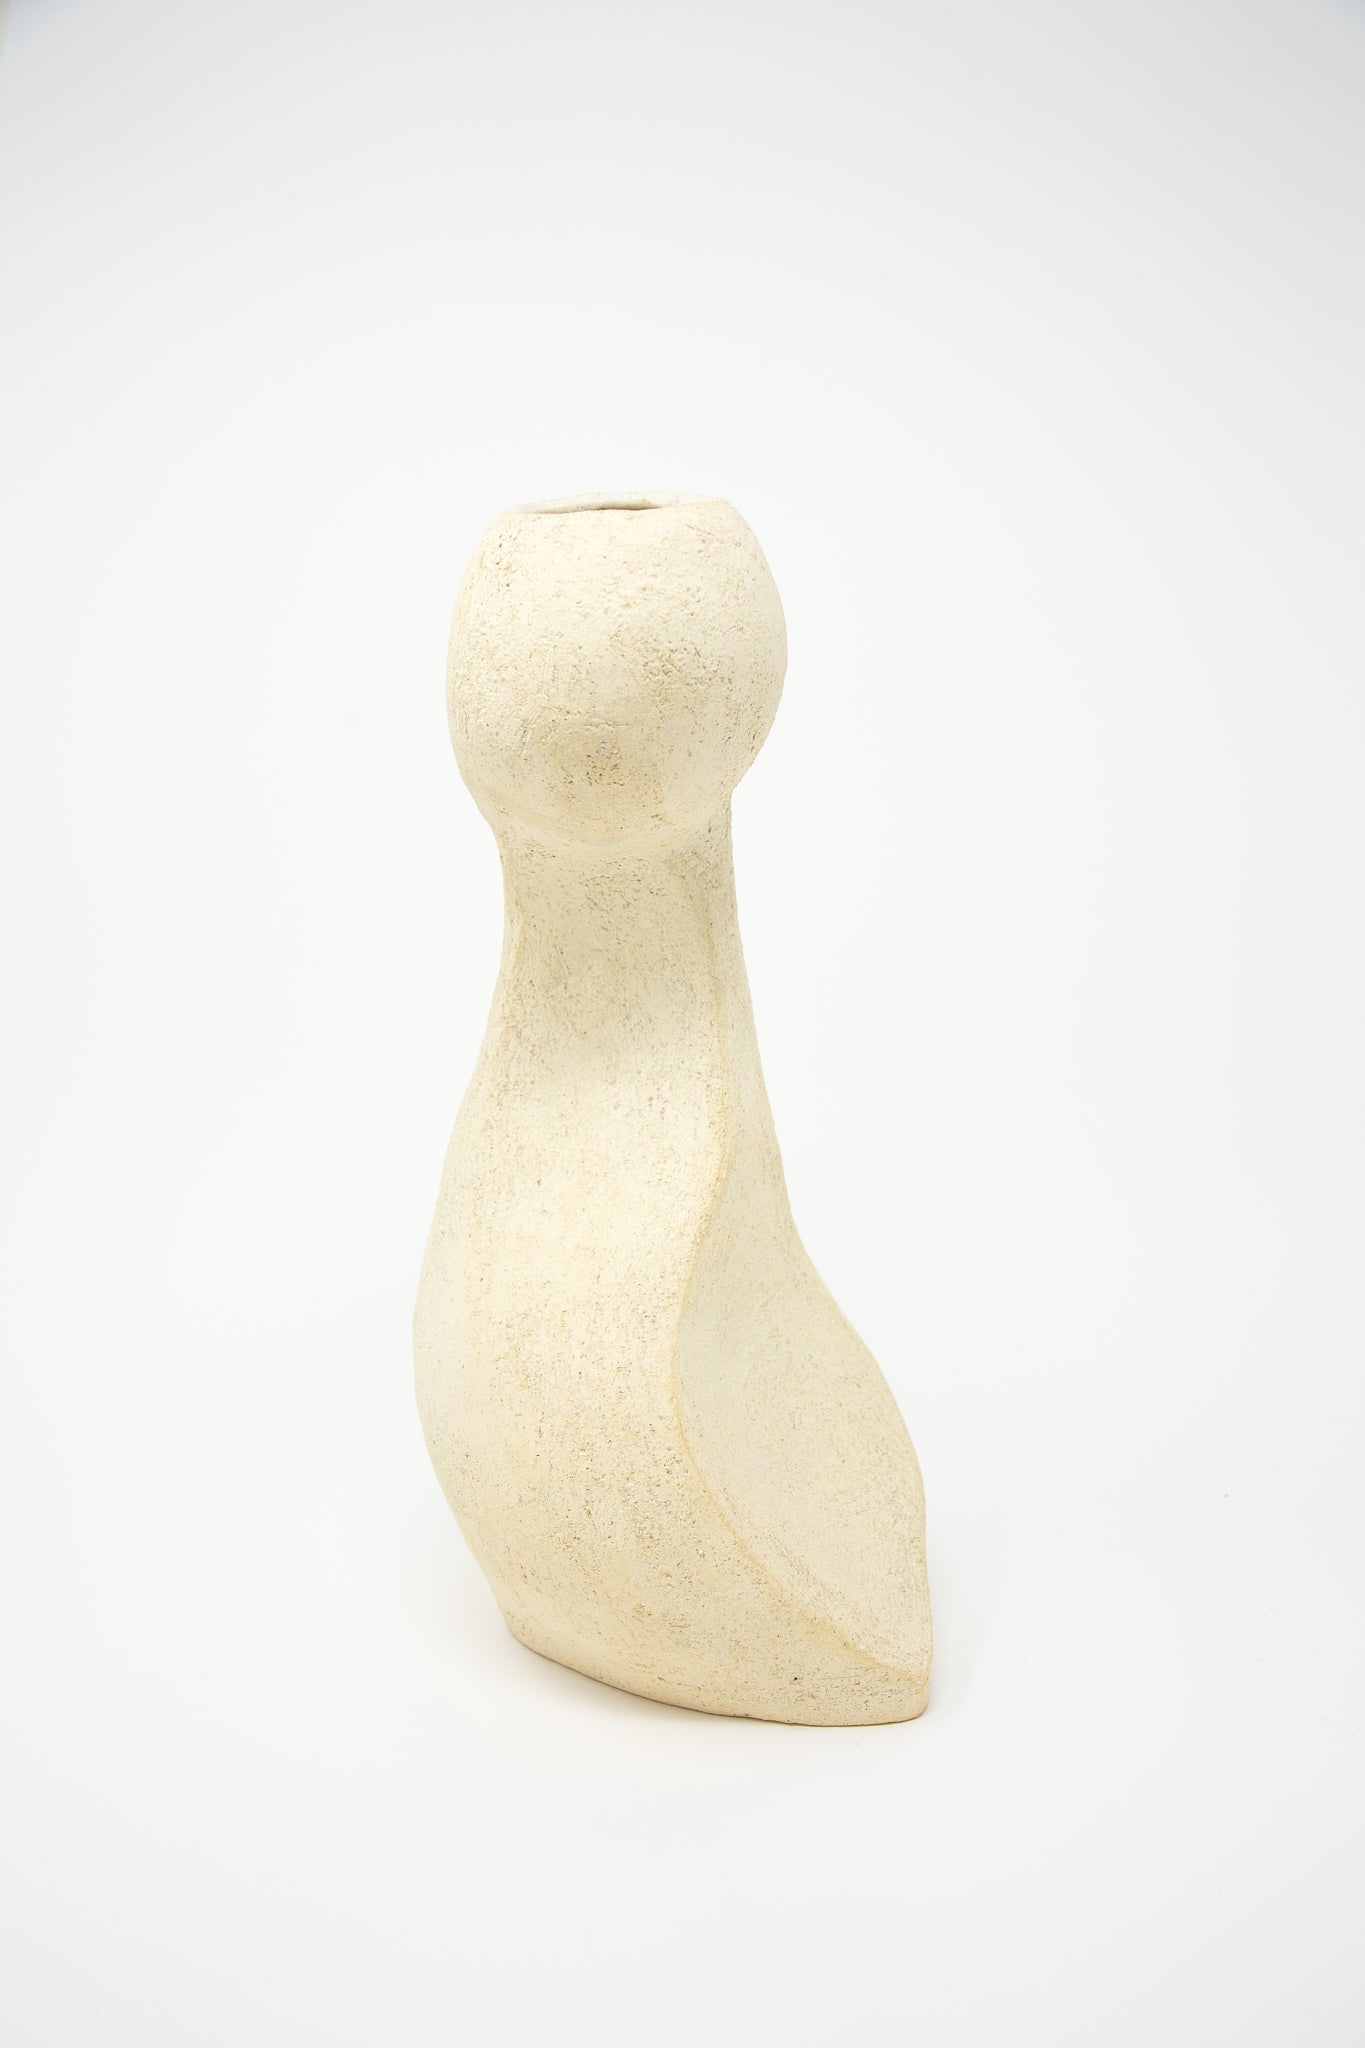 Description: A Lost Quarry medium hand-built vessel No. 000713 bud vase sitting on a white surface, perfect for floral arrangements.